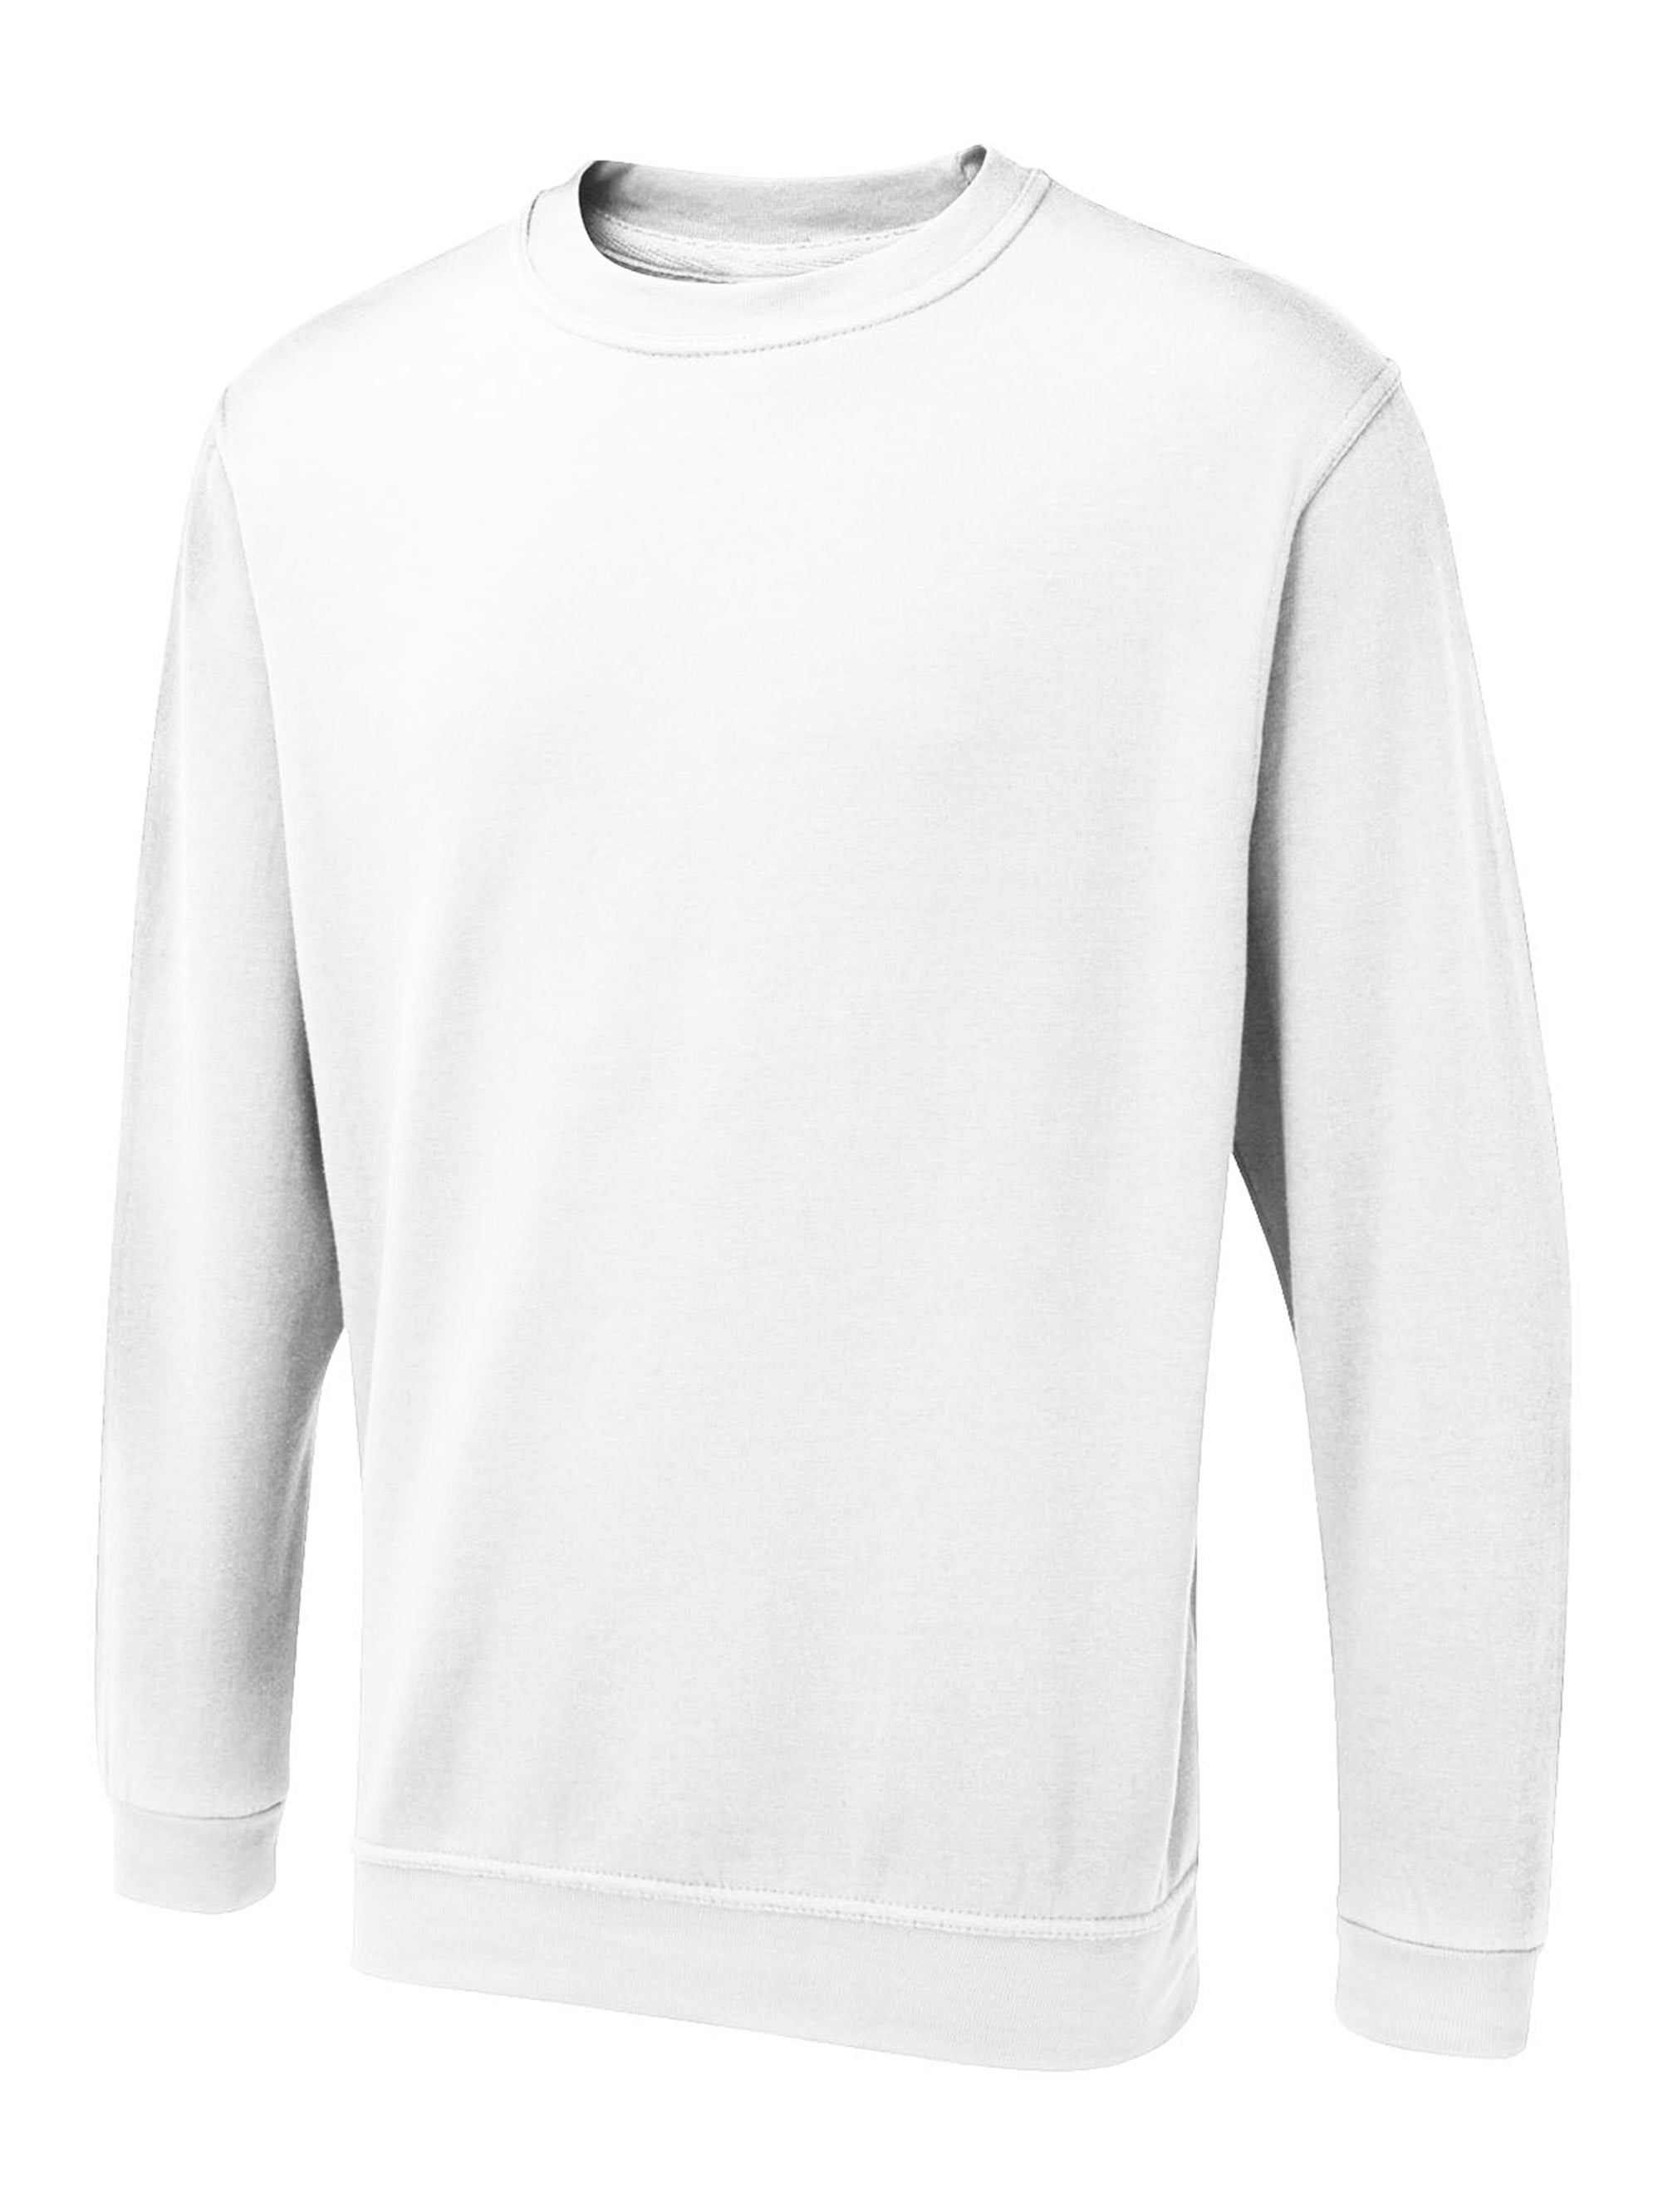 Uneek The UX Sweatshirt - ux3 (White)